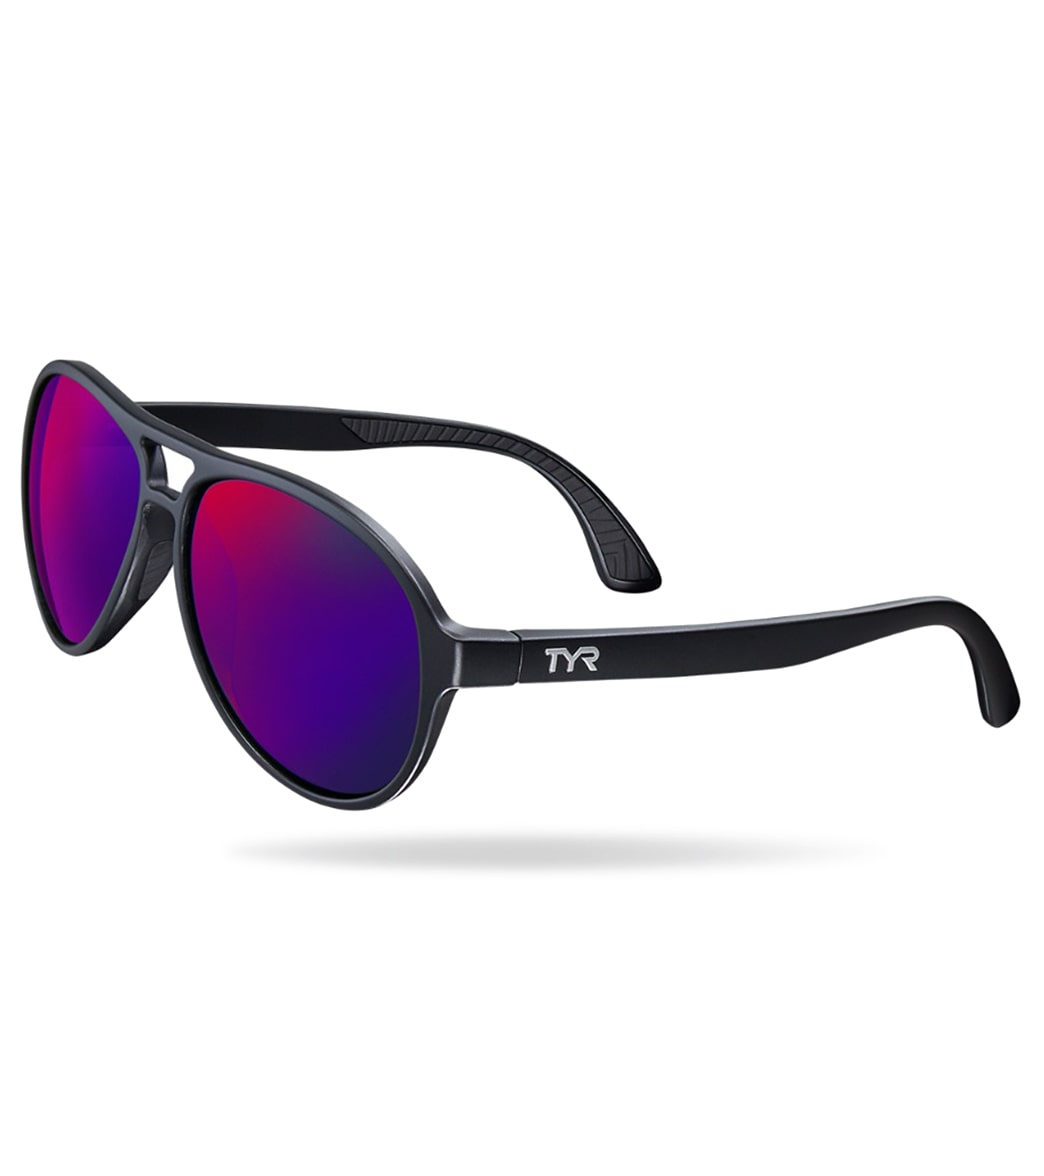 TYR Men's Newland Aviator Small Sunglasses - Purple/Black - Swimoutlet.com